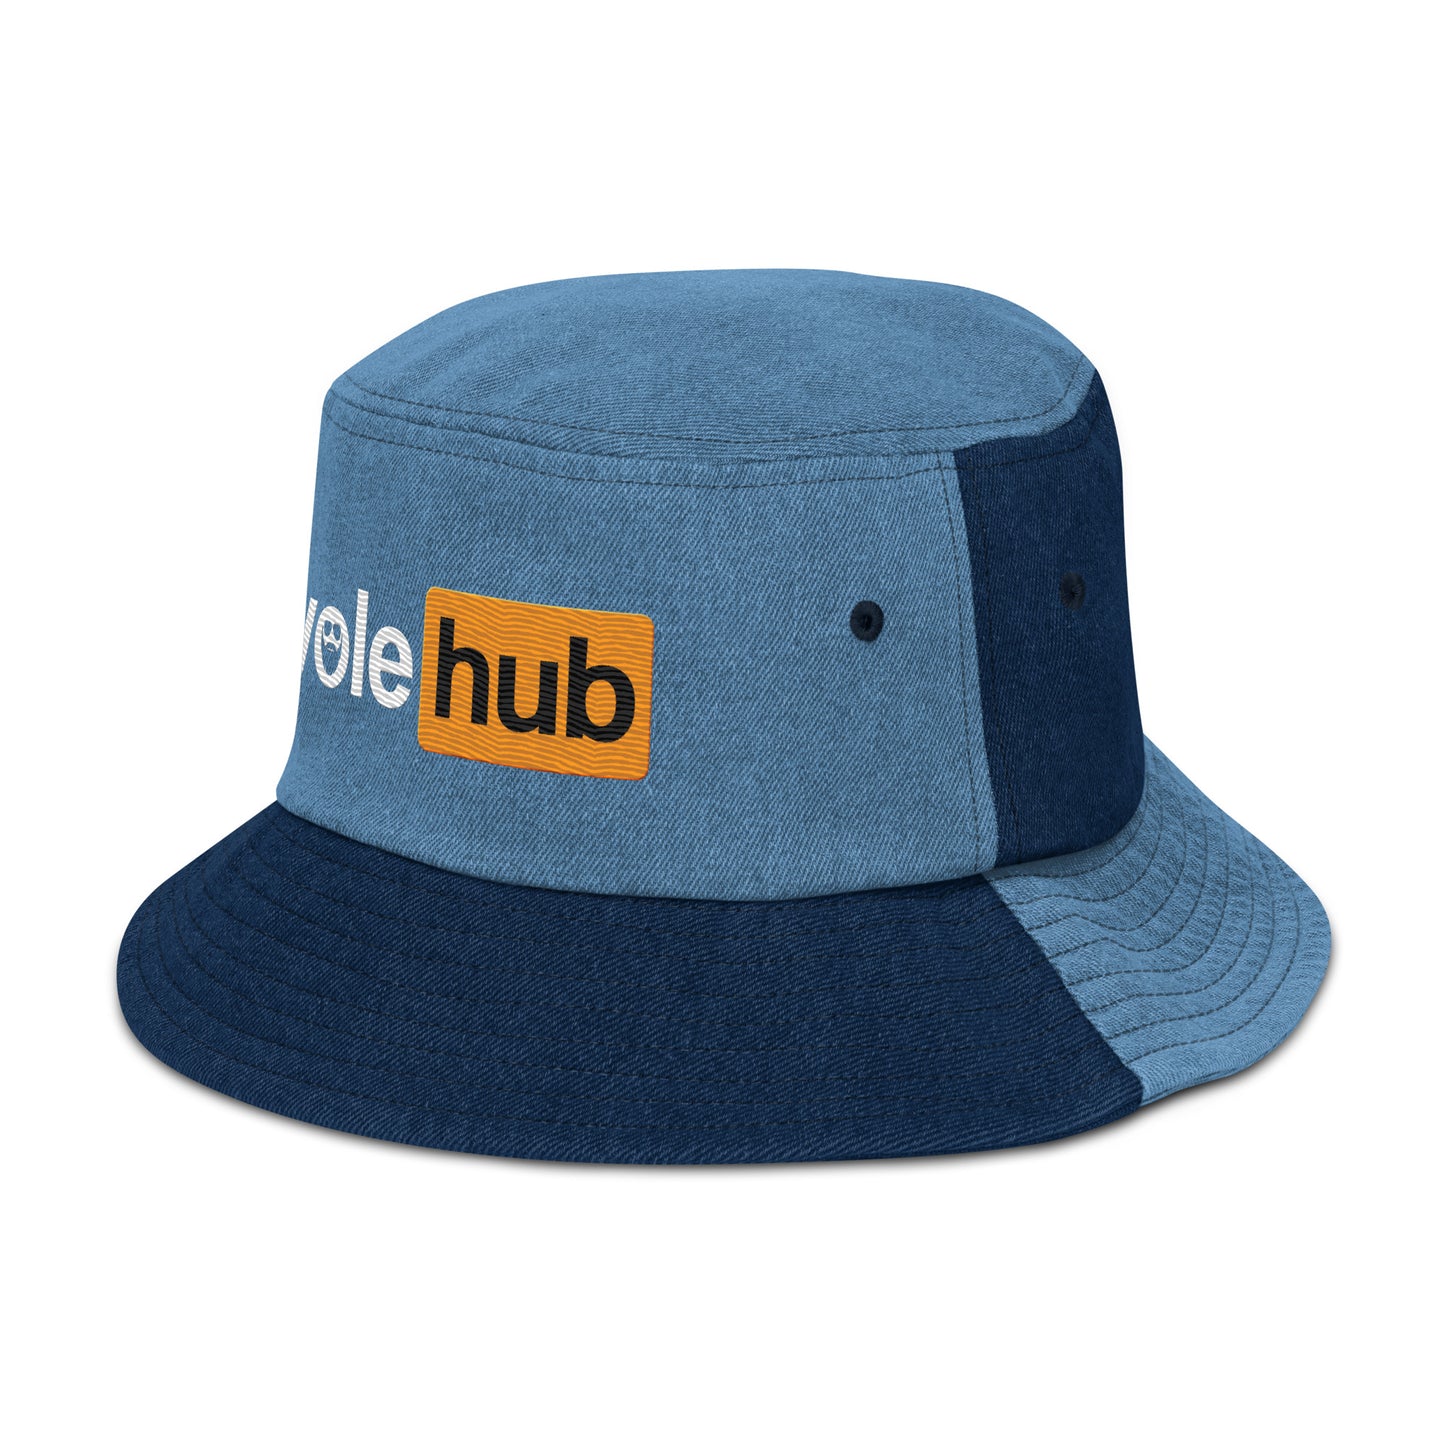 Swole Hub Denim Bucket Hat